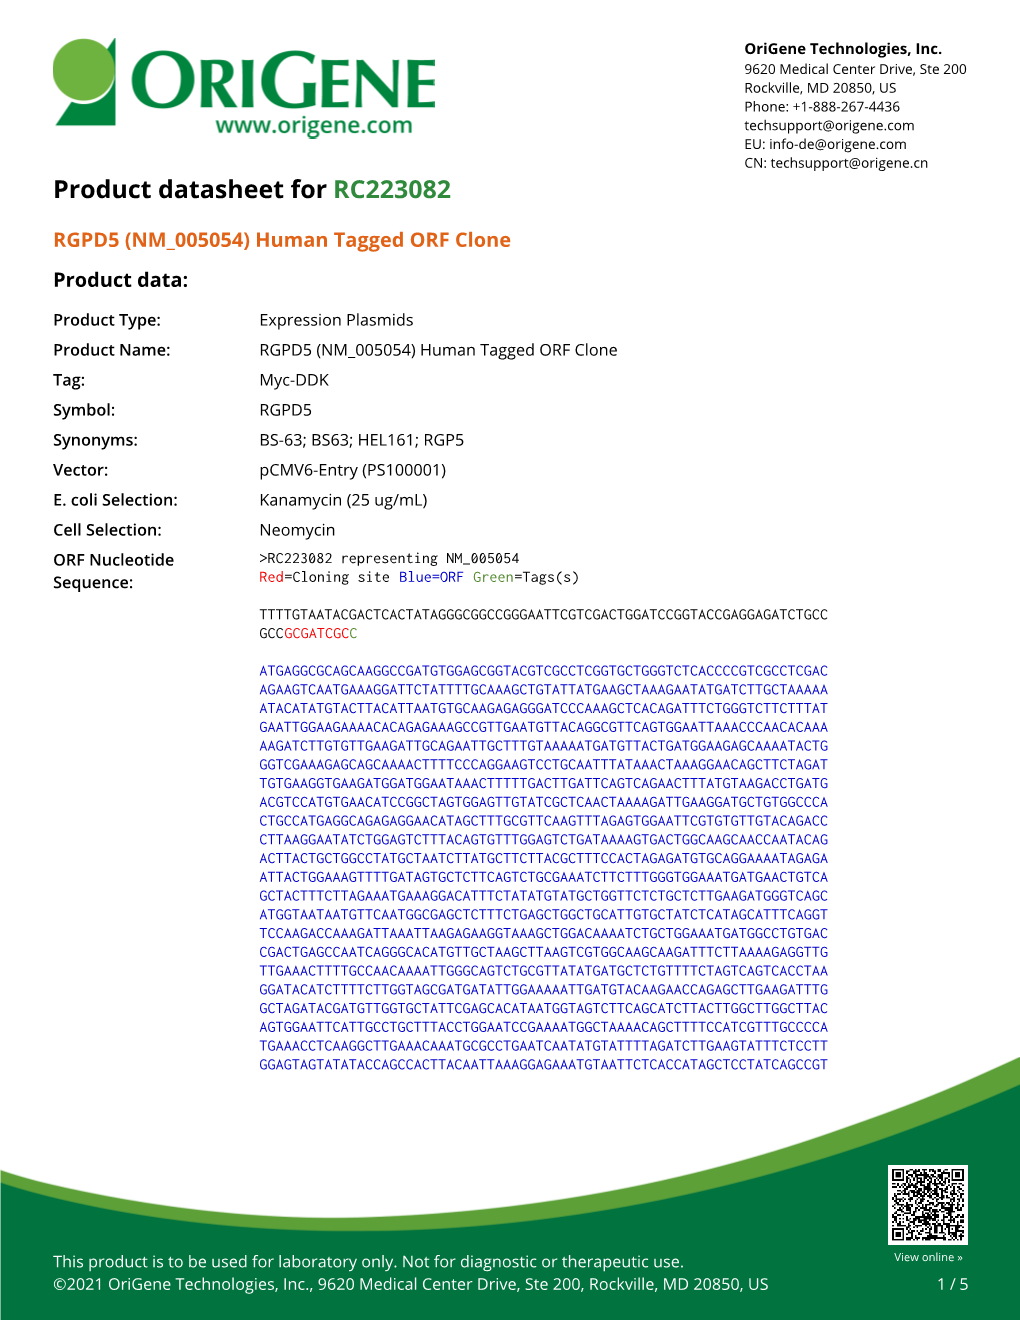 RGPD5 (NM 005054) Human Tagged ORF Clone – RC223082